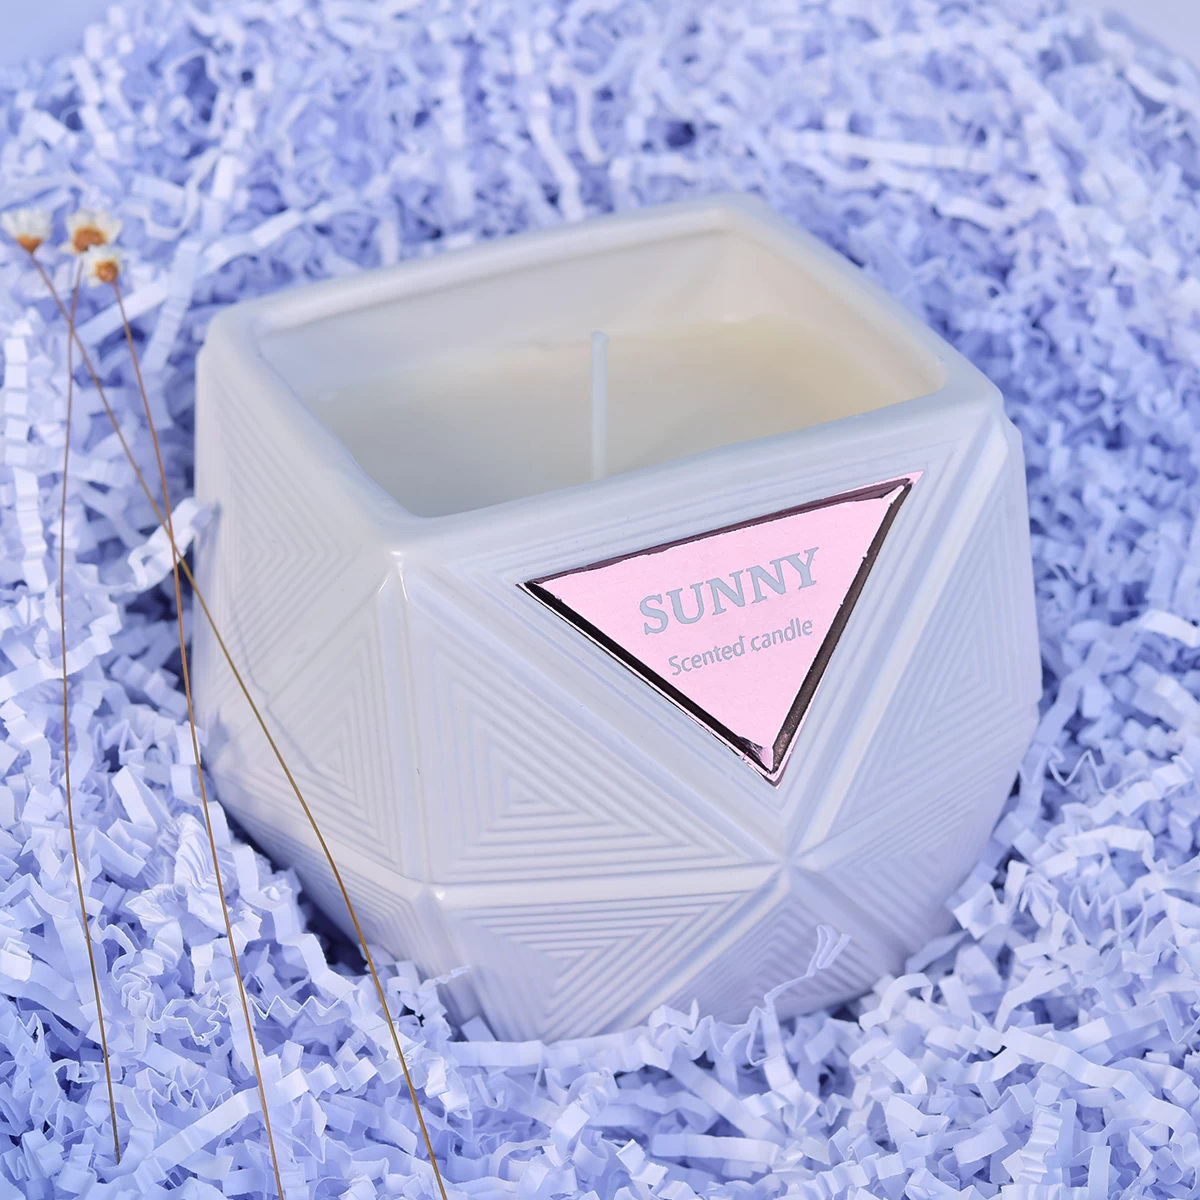 8oz 10oz Sunny scented geometric luxury glass votive candle jar